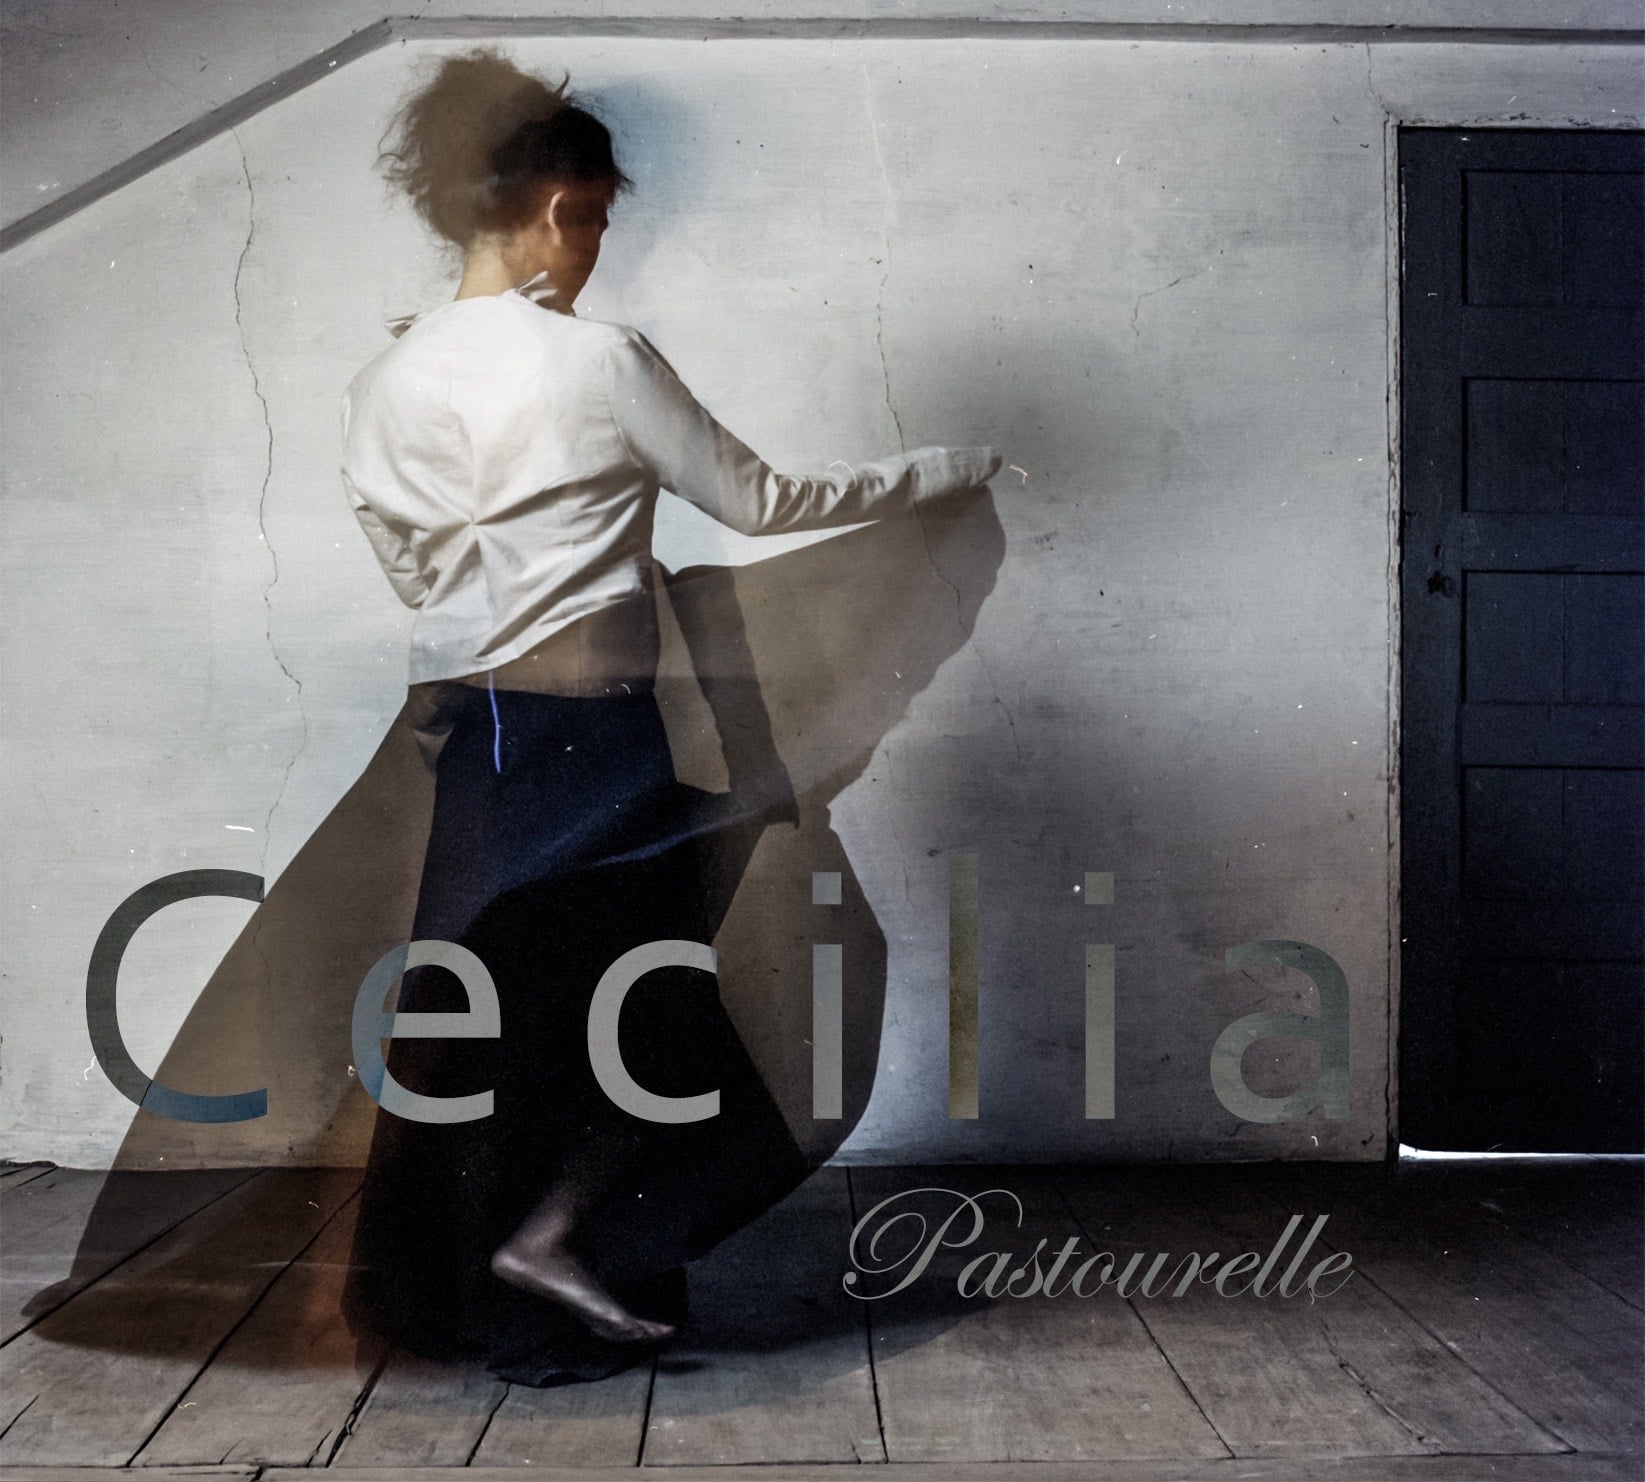 Beveiligd: CD Cecilia Pastourelle